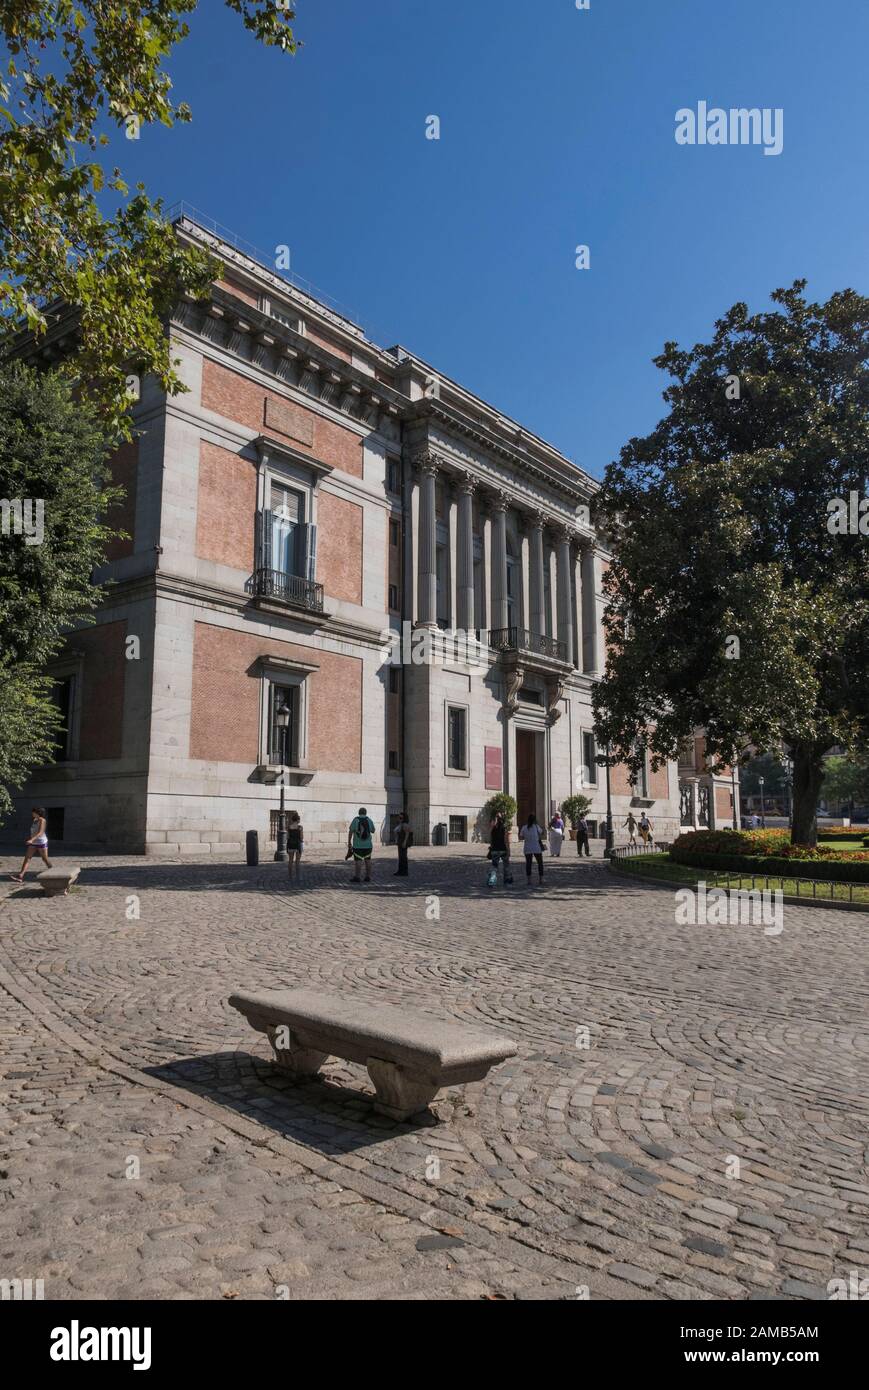 The exterior of the Prado Museum in Madrid, Spain Stock Photo